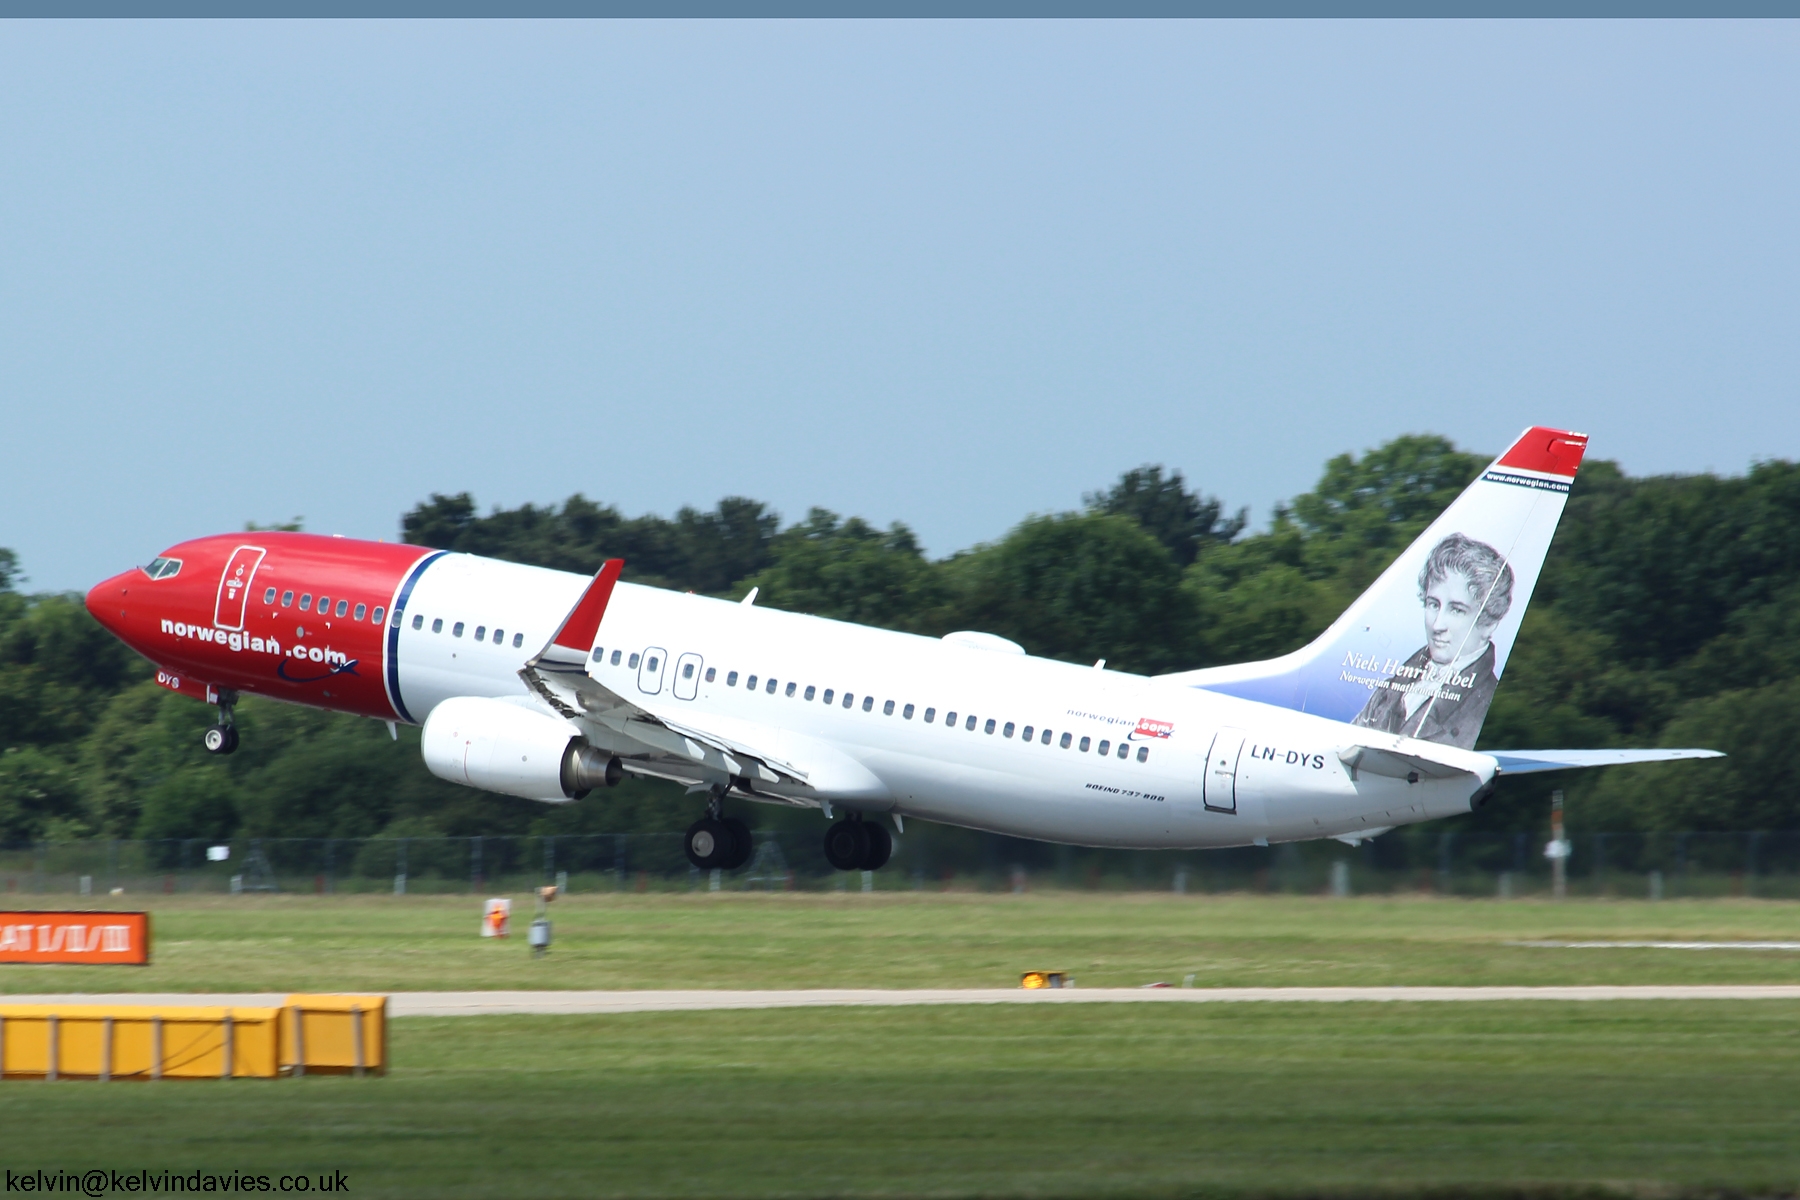 Norwegian 737 LN-DYS